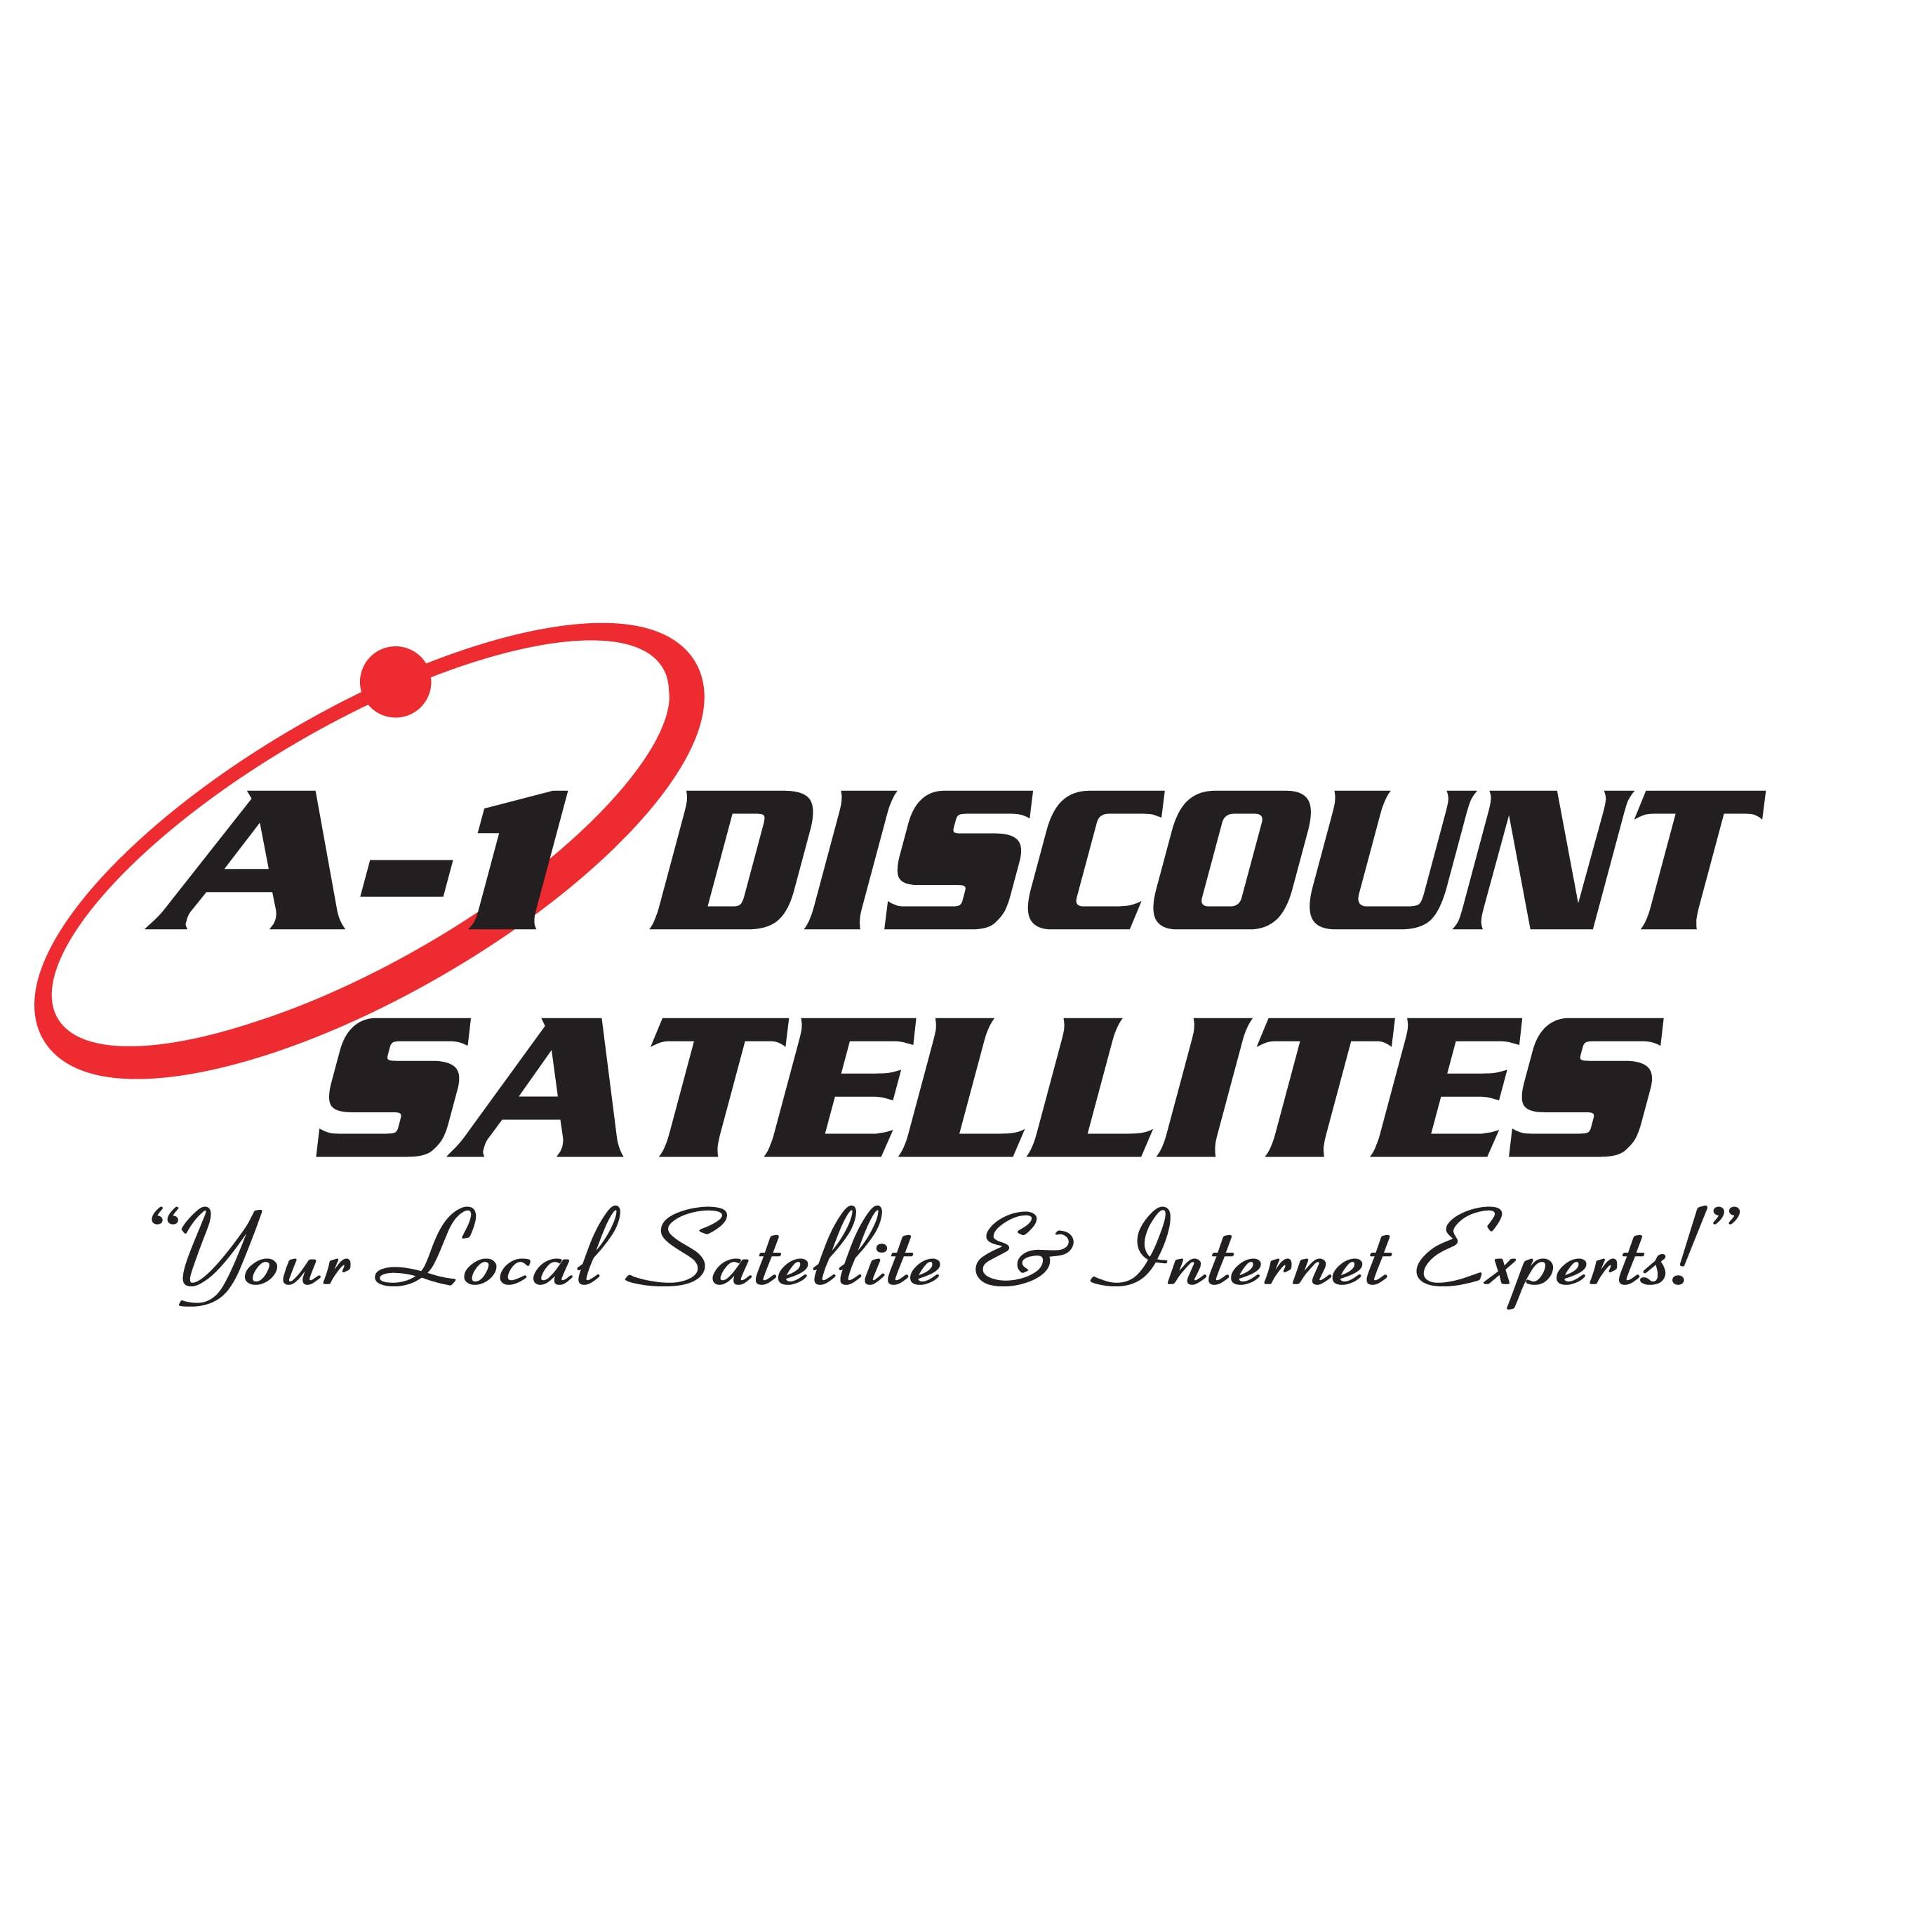 A -1 Discount Satellites Logo